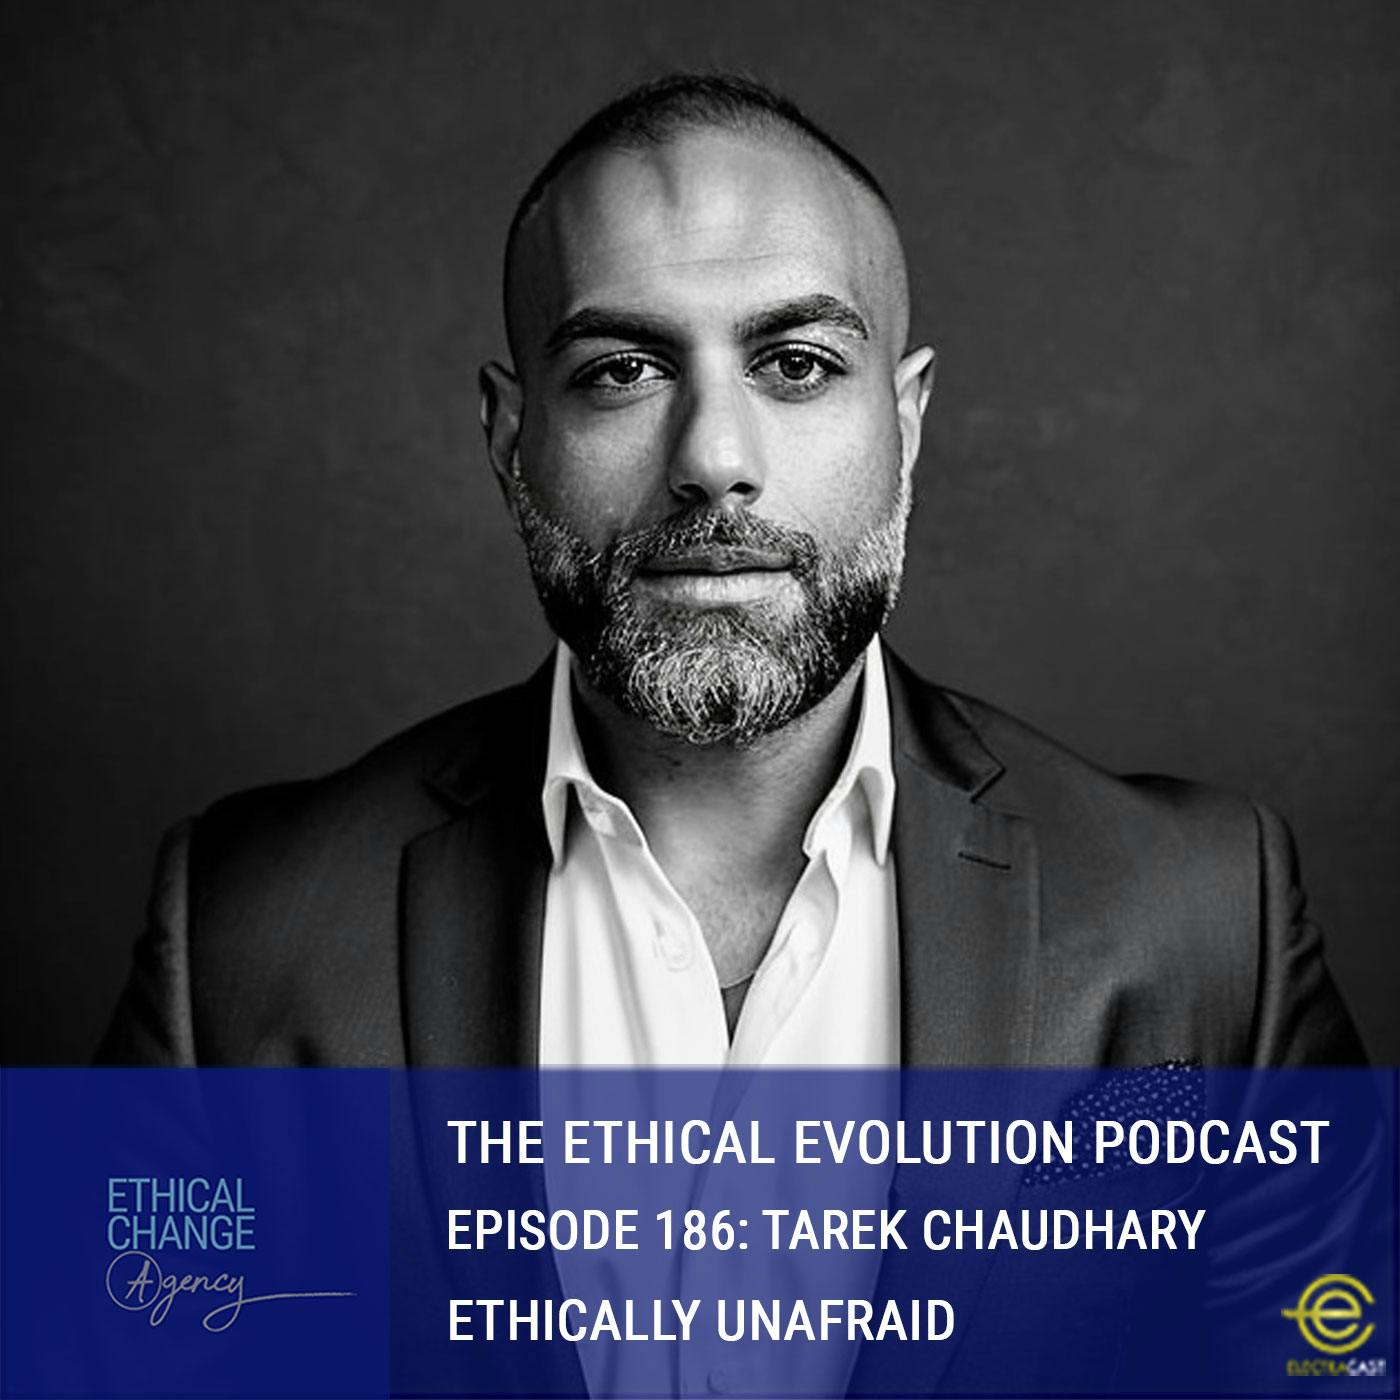 Ethically Unafraid with Tarek Chaudhary